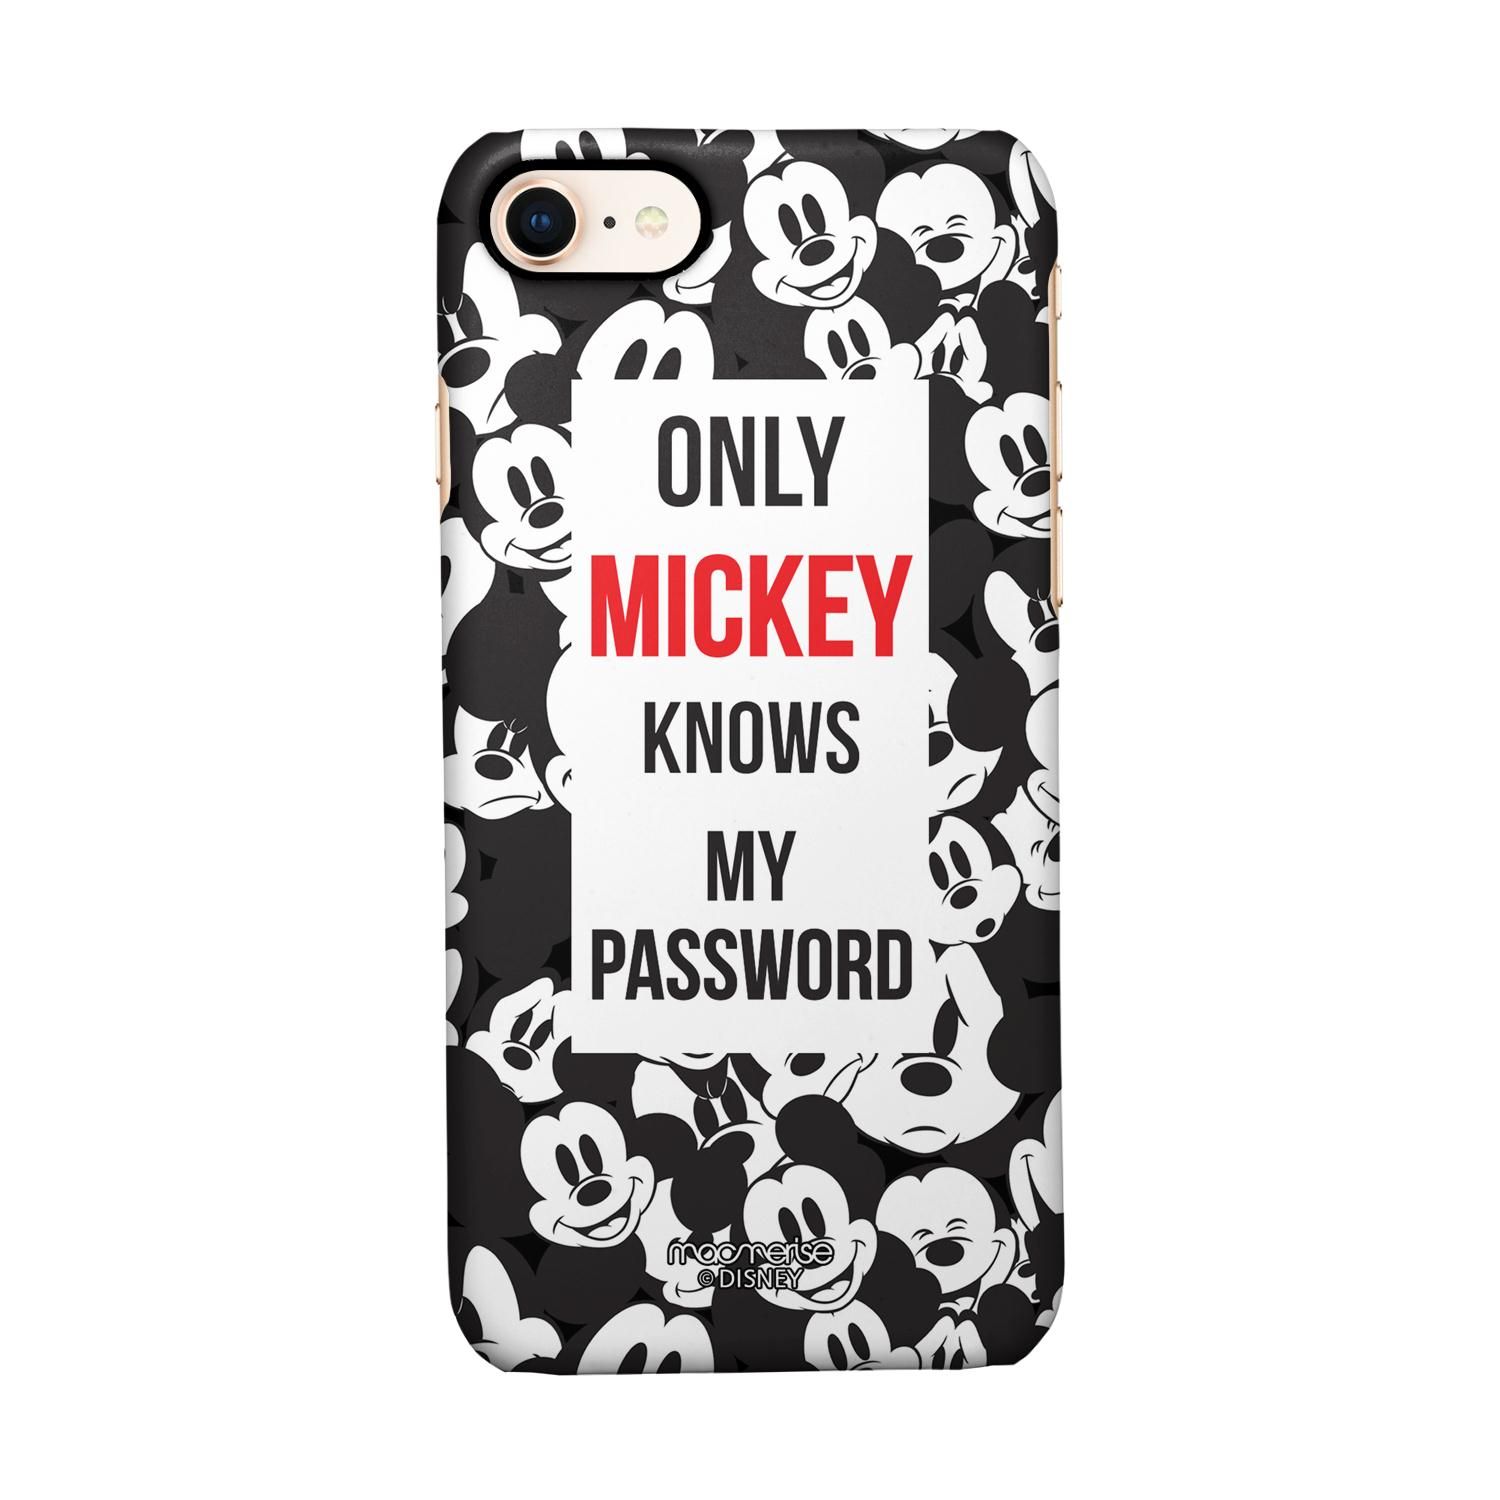 Buy Mickey my Password - Sleek Phone Case for iPhone 7 Online